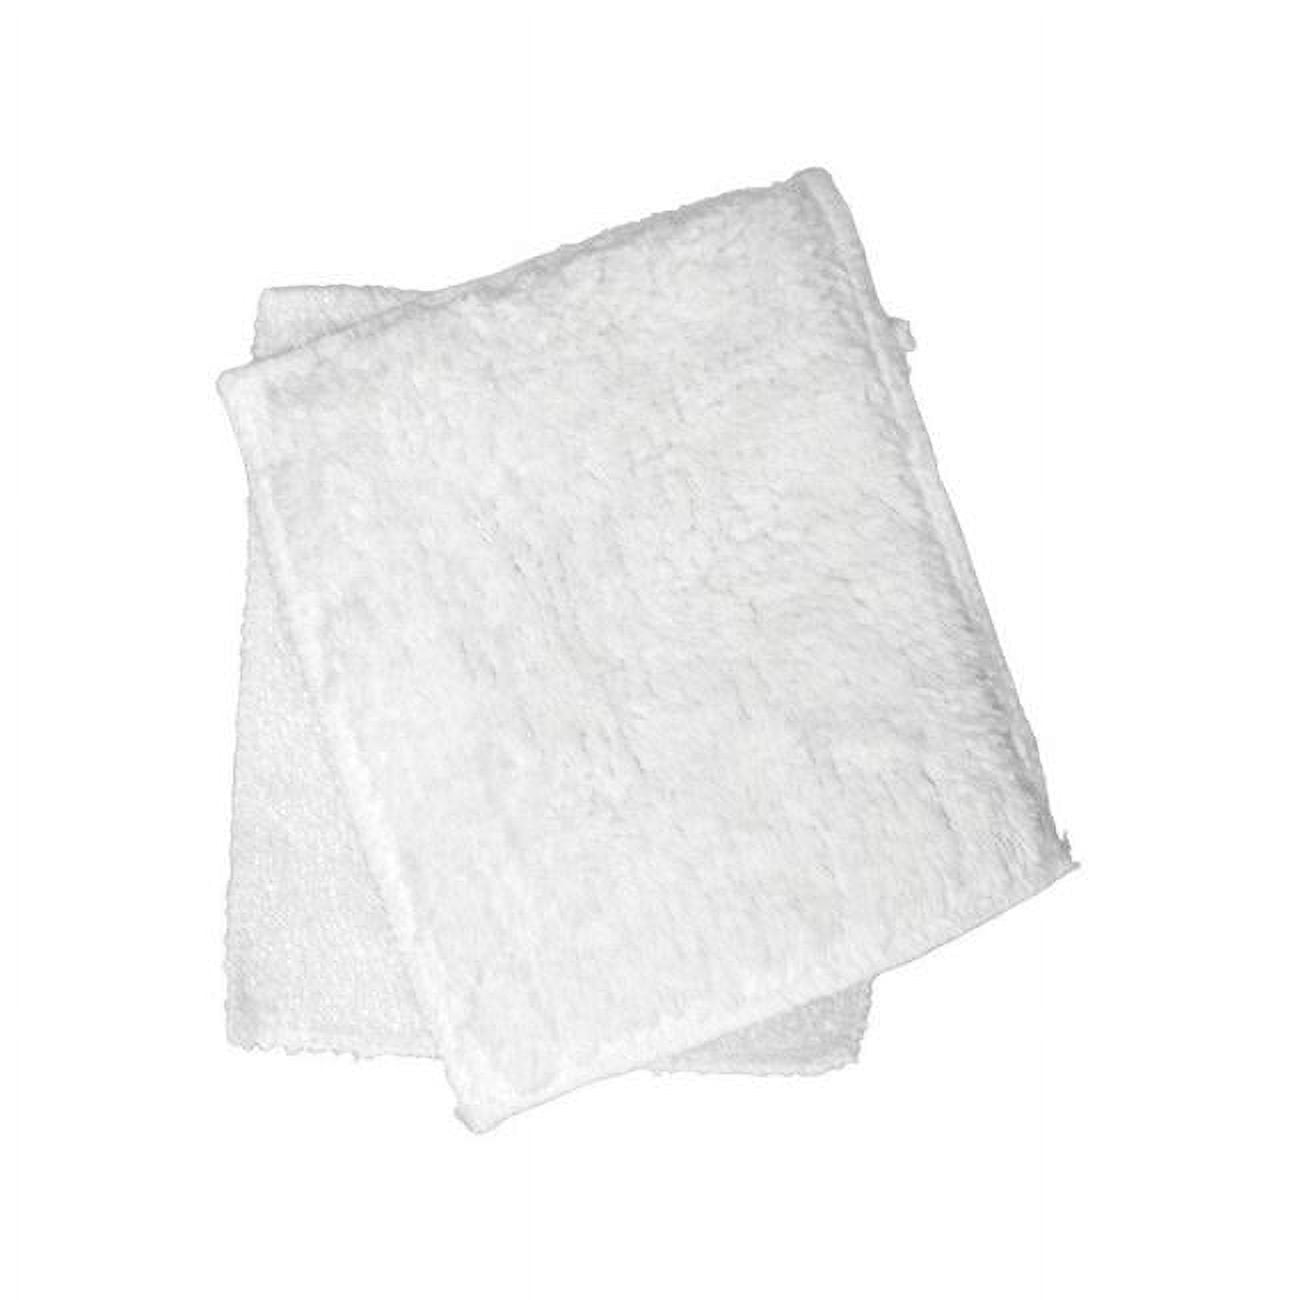 6692727 Janey Lynns Designs Shrubbie Snow White Cotton & Nylon Dish Cloth, Pack Of 2 - Case Of 6